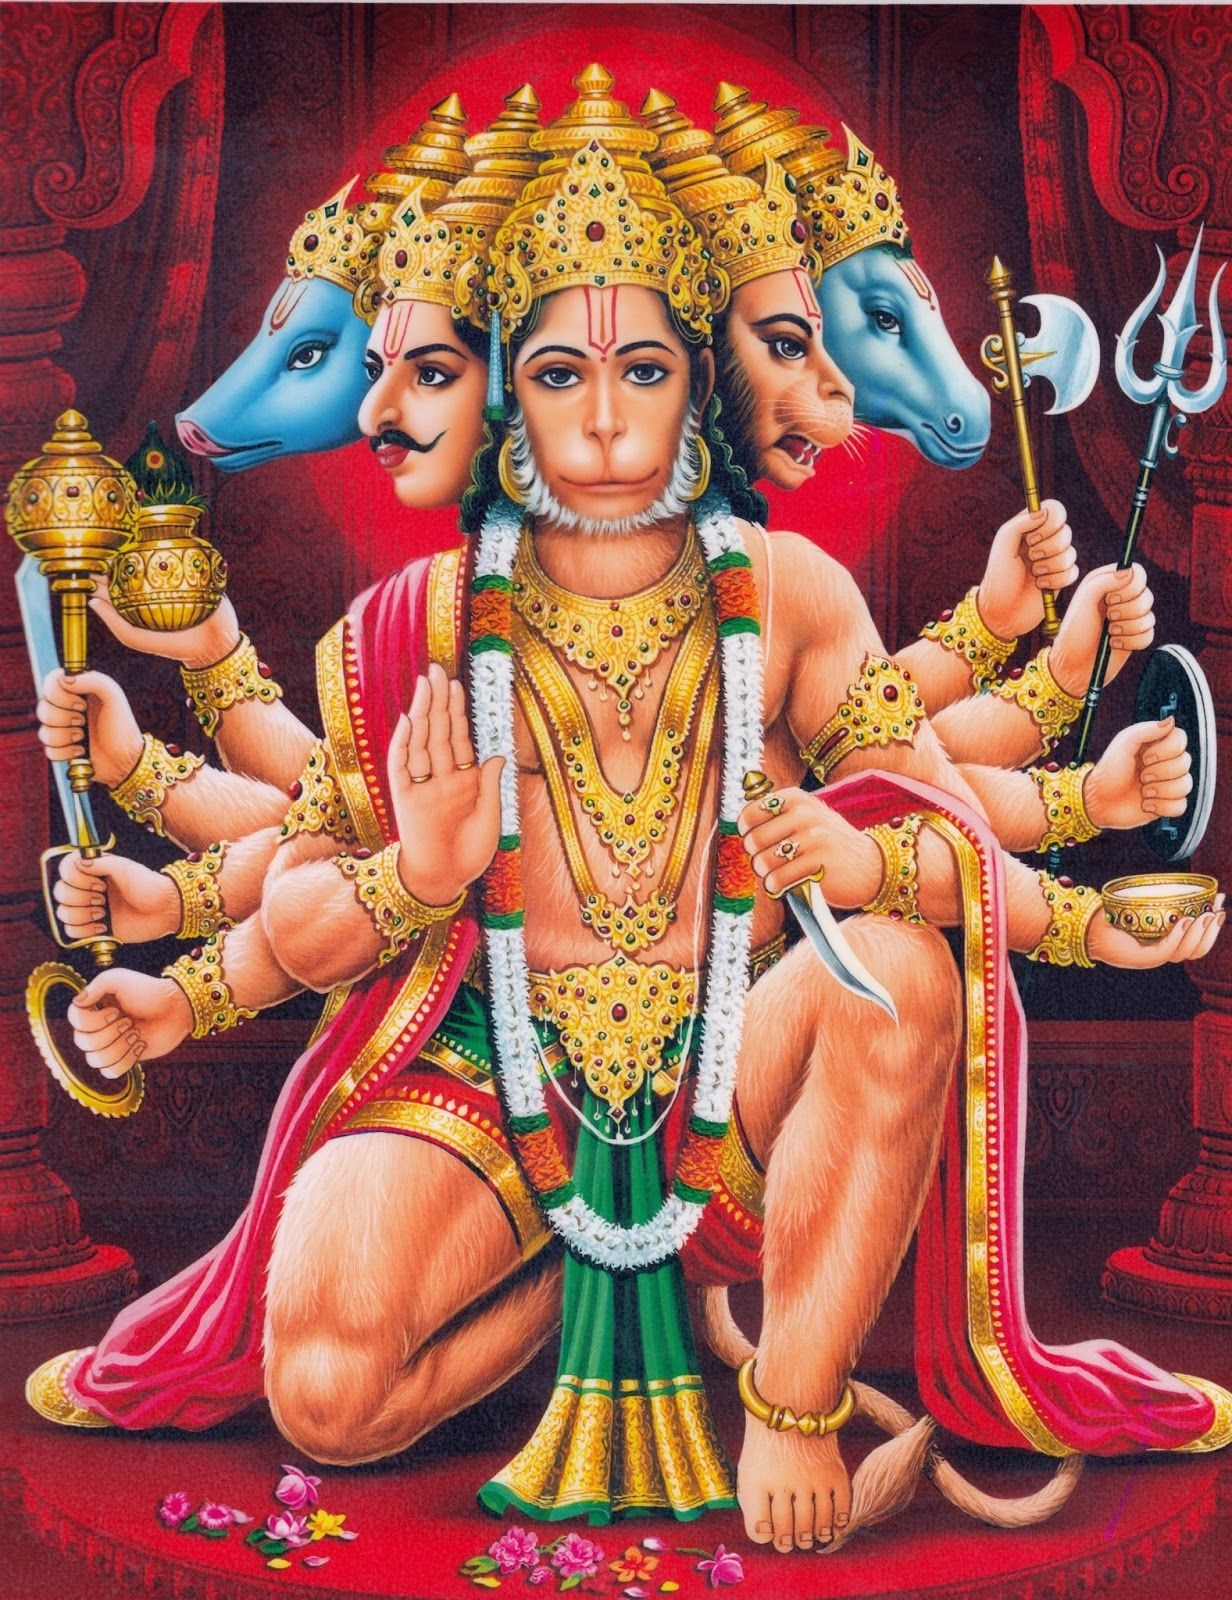 Lord Hanuman Art 4K Ultra HD Mobile Wallpaper